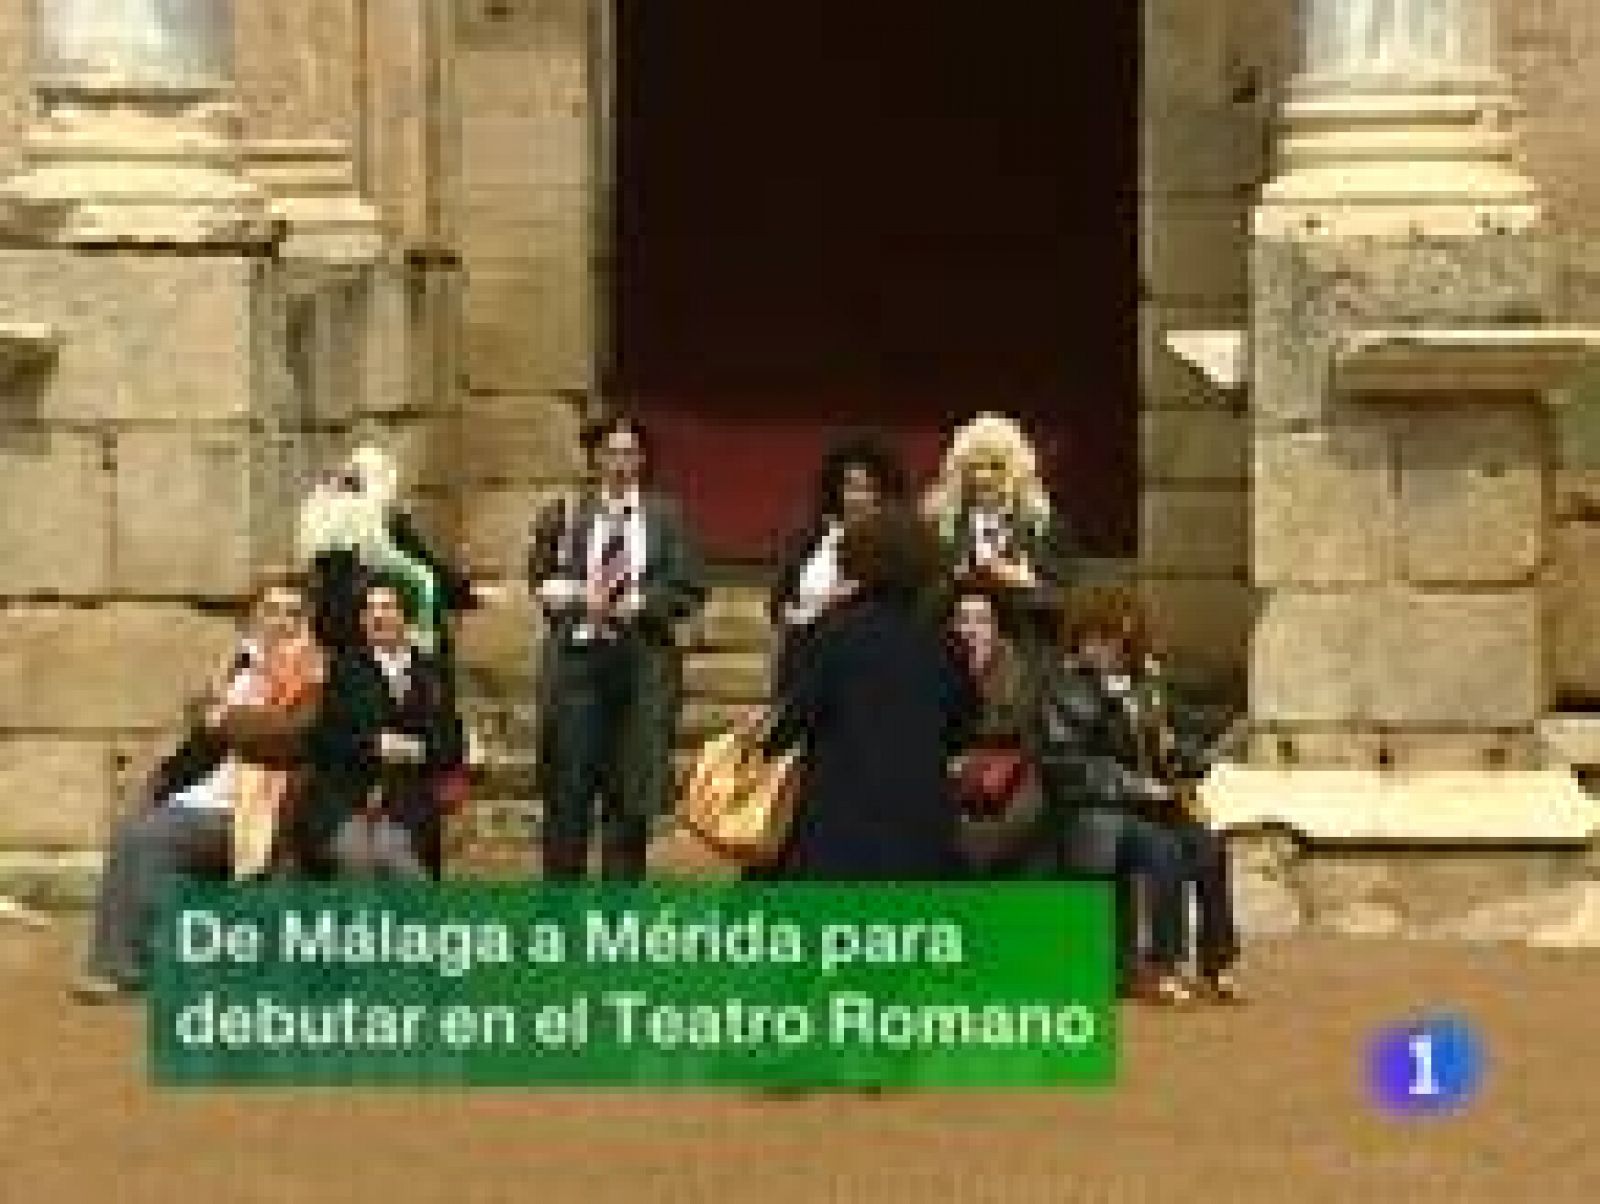 Noticias de Extremadura: Noticias de Extremadura - 21/04/10 | RTVE Play